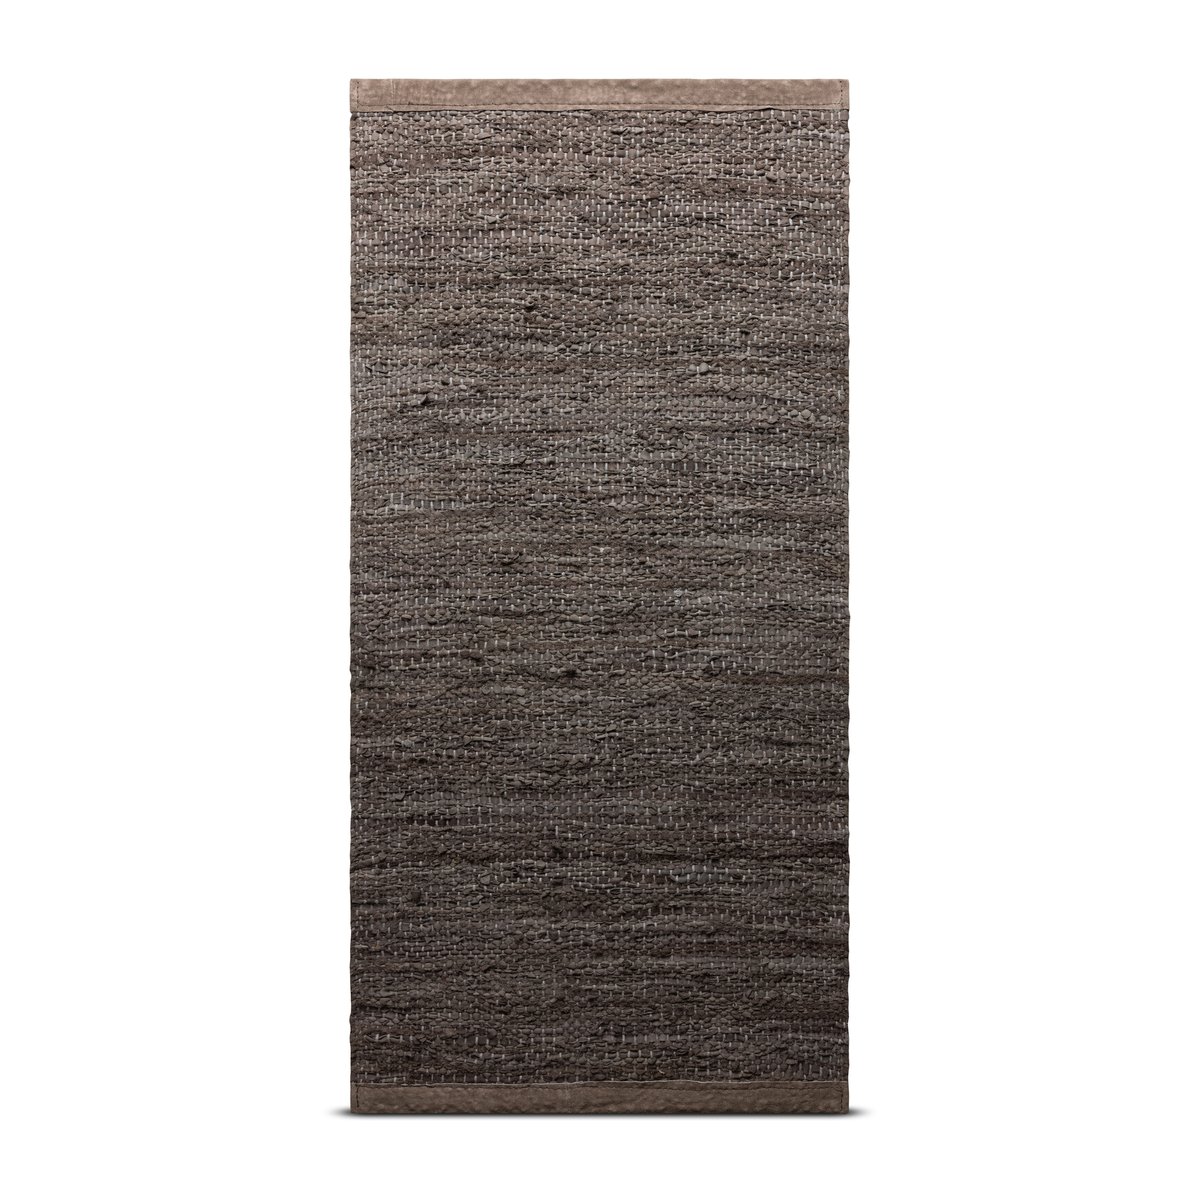 Bilde av Rug Solid Leather gulvteppe 140x200 cm Wood (brun)